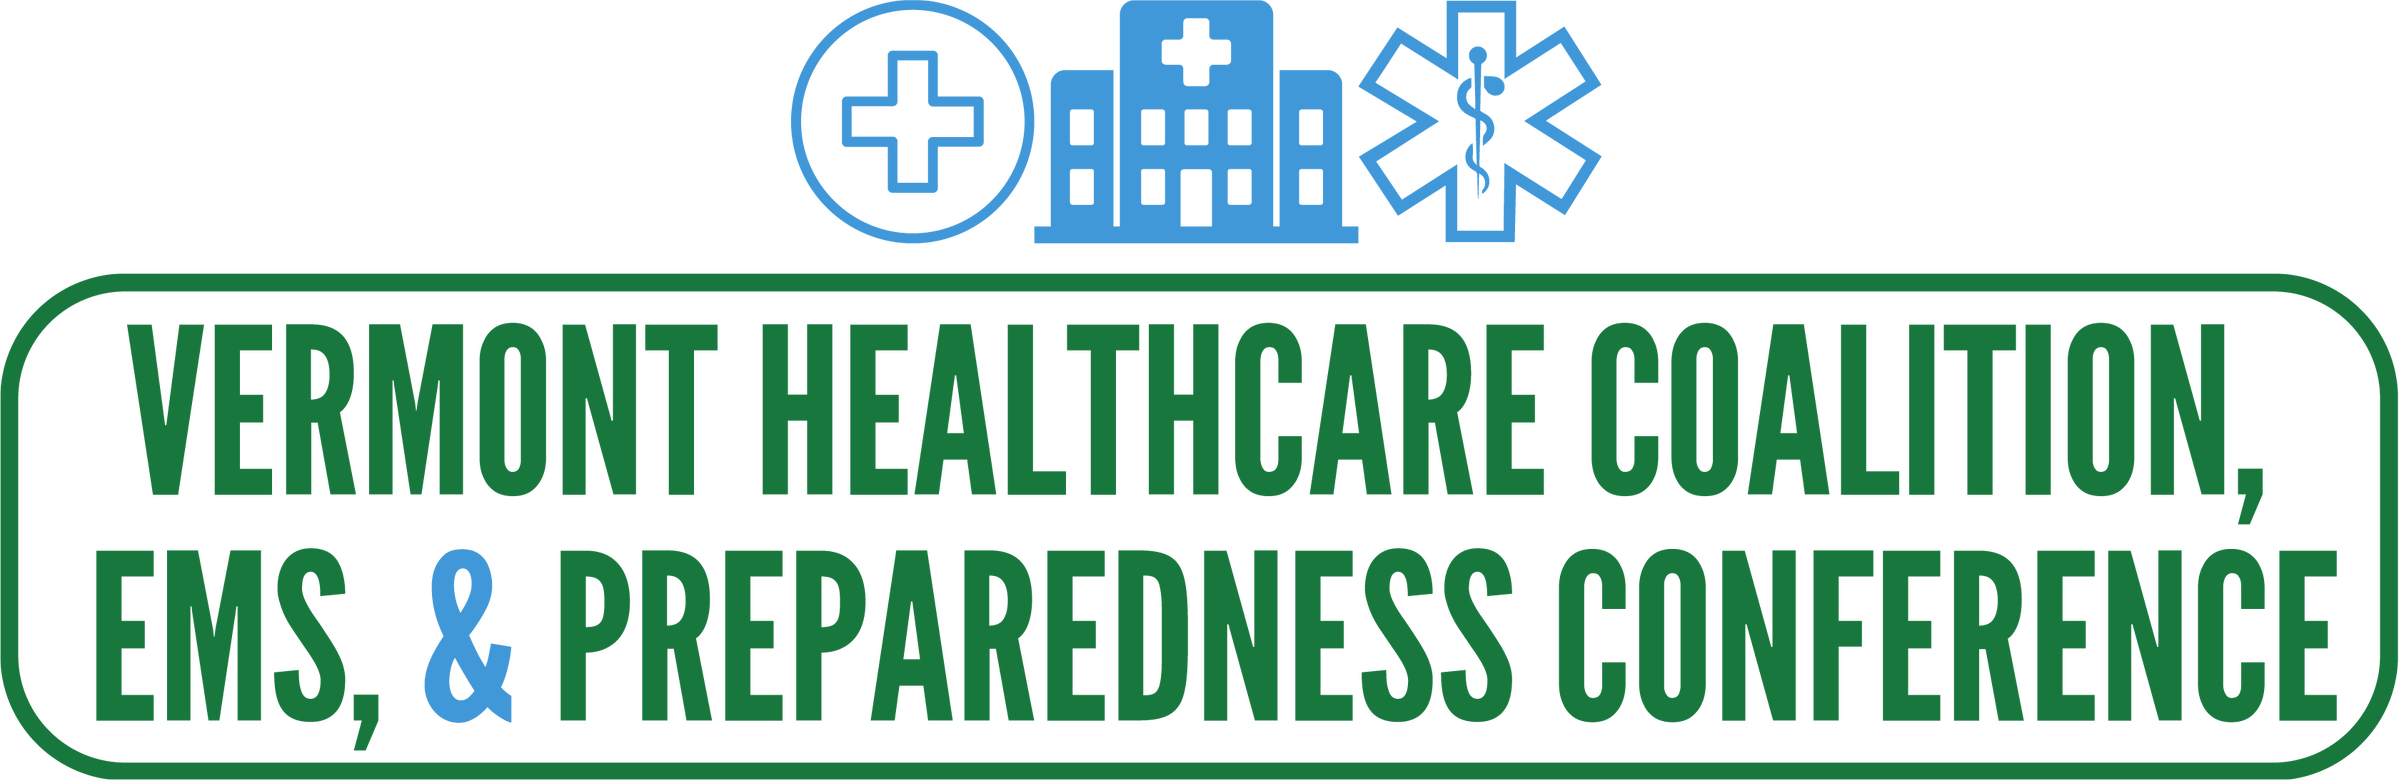 Vermont Healthcare Coalition, EMS, & Preparedness Conference Logo